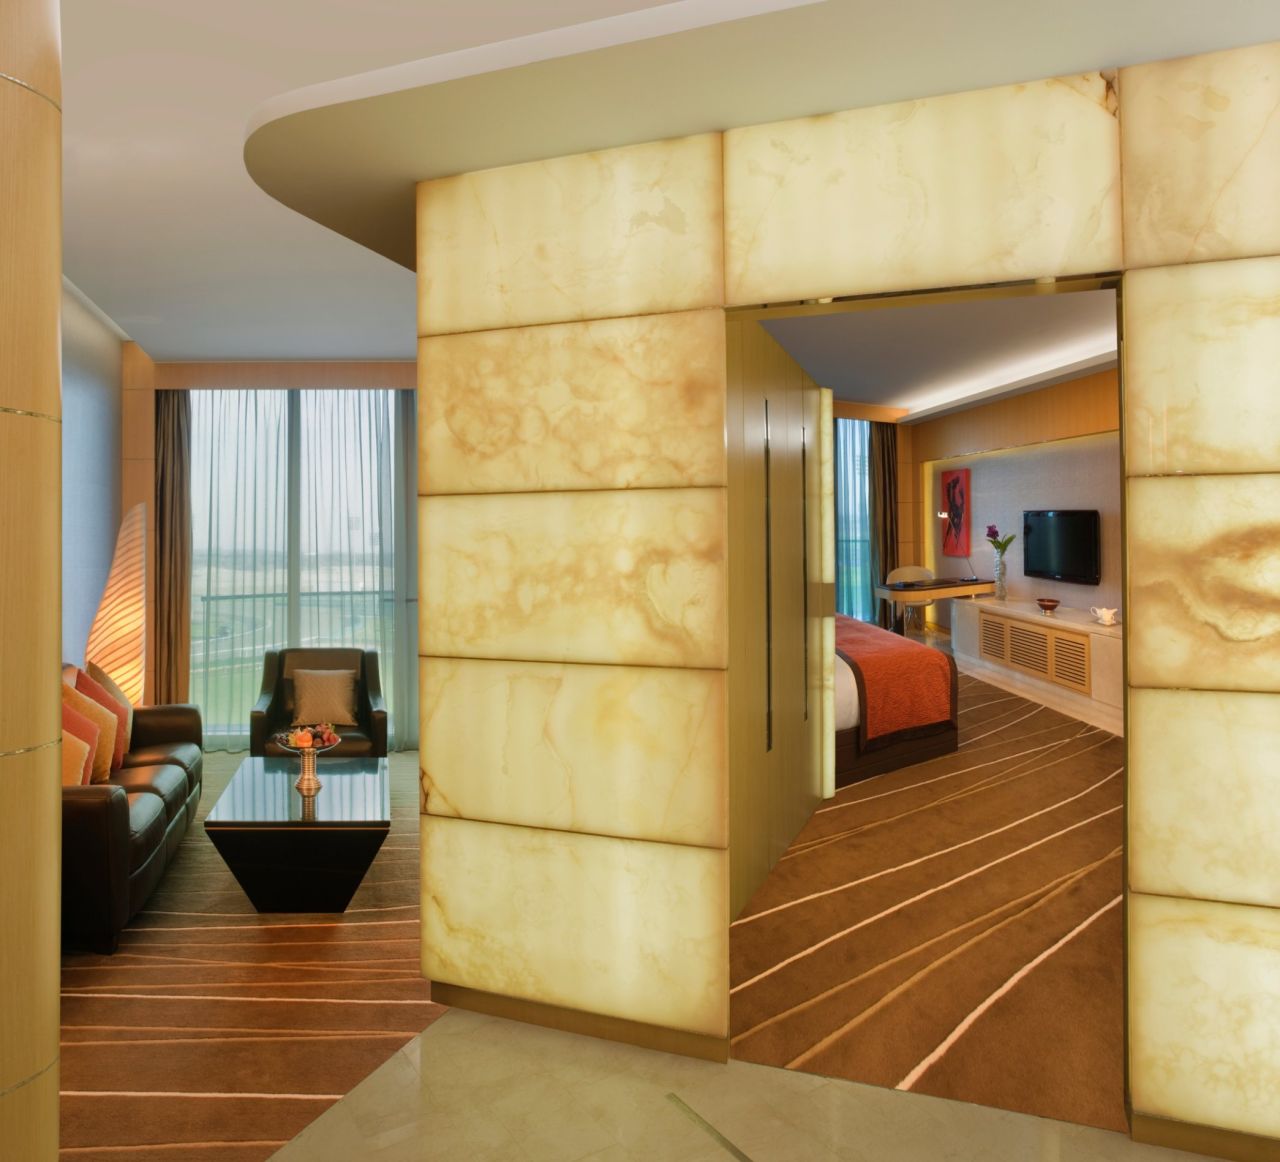 A standard room at the not-so-standard Meydan Hotel. 